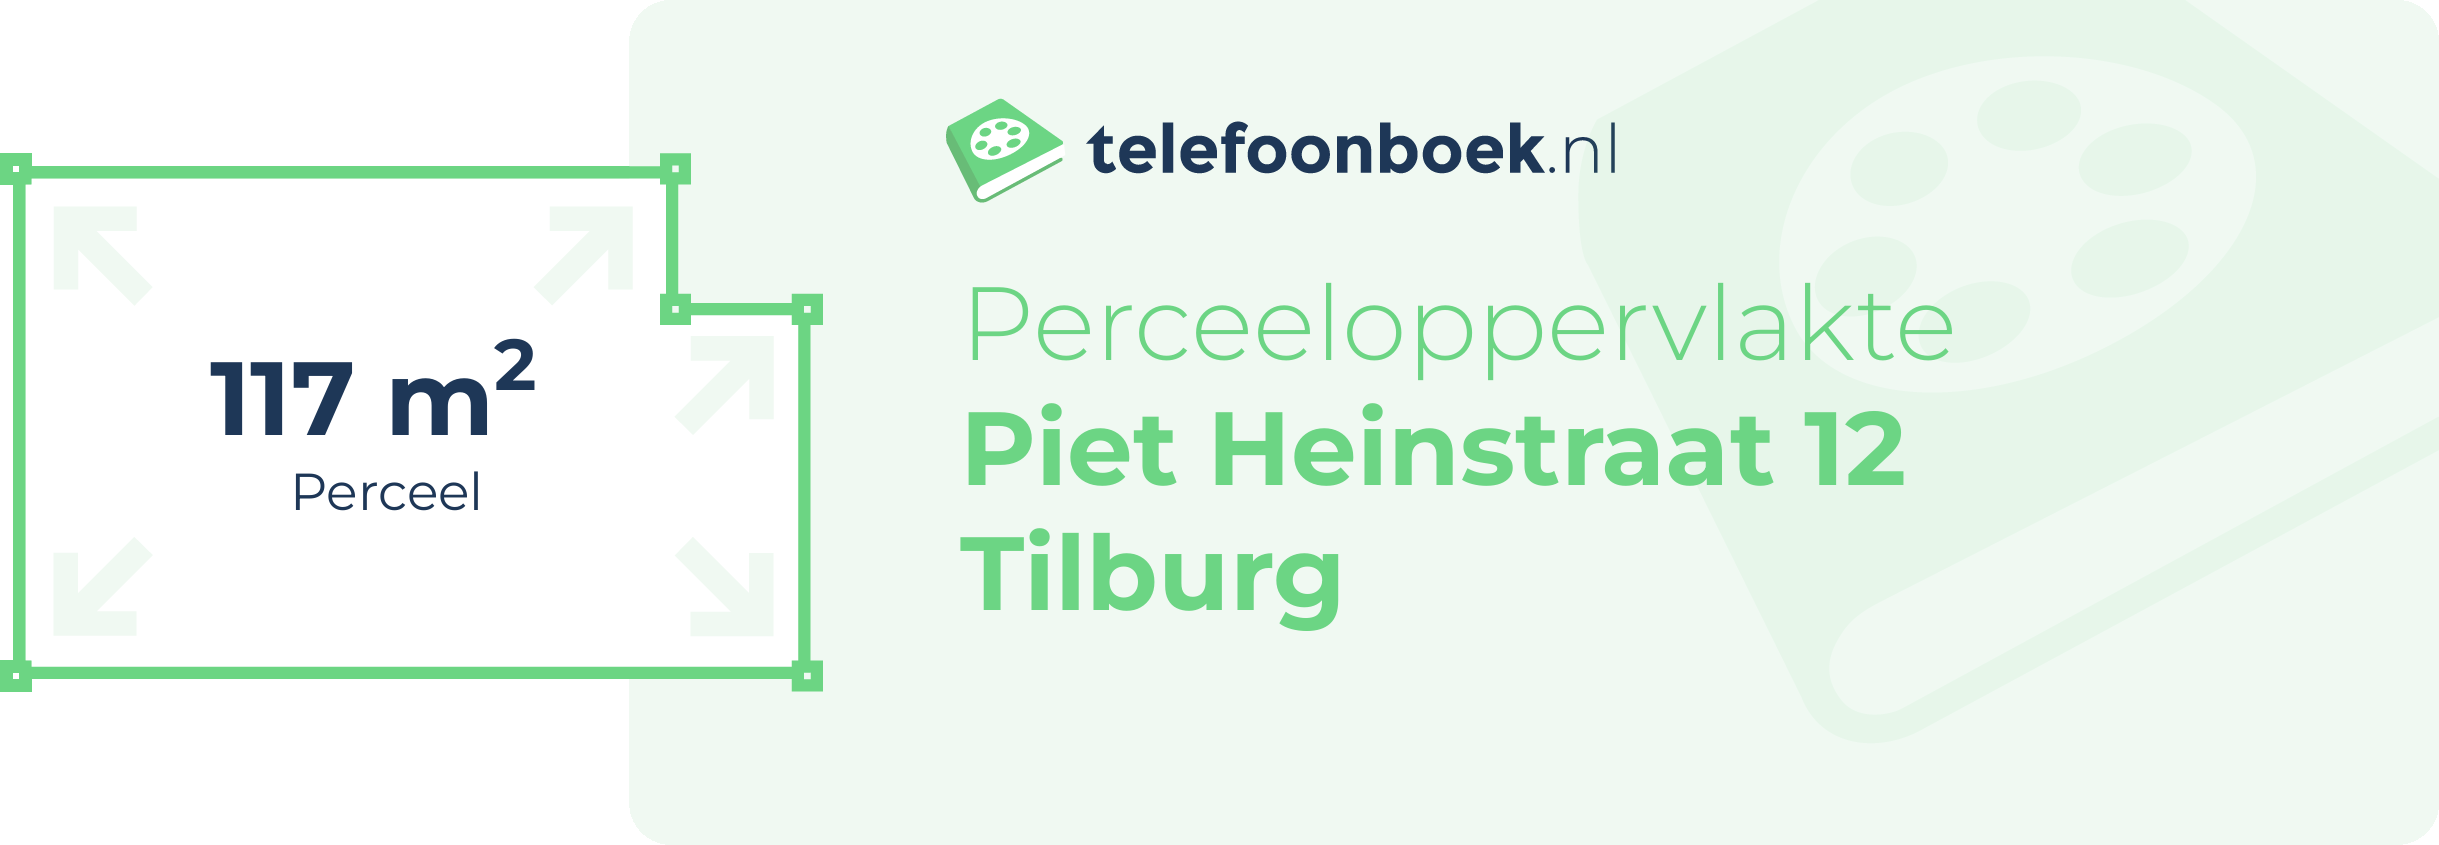 Perceeloppervlakte Piet Heinstraat 12 Tilburg